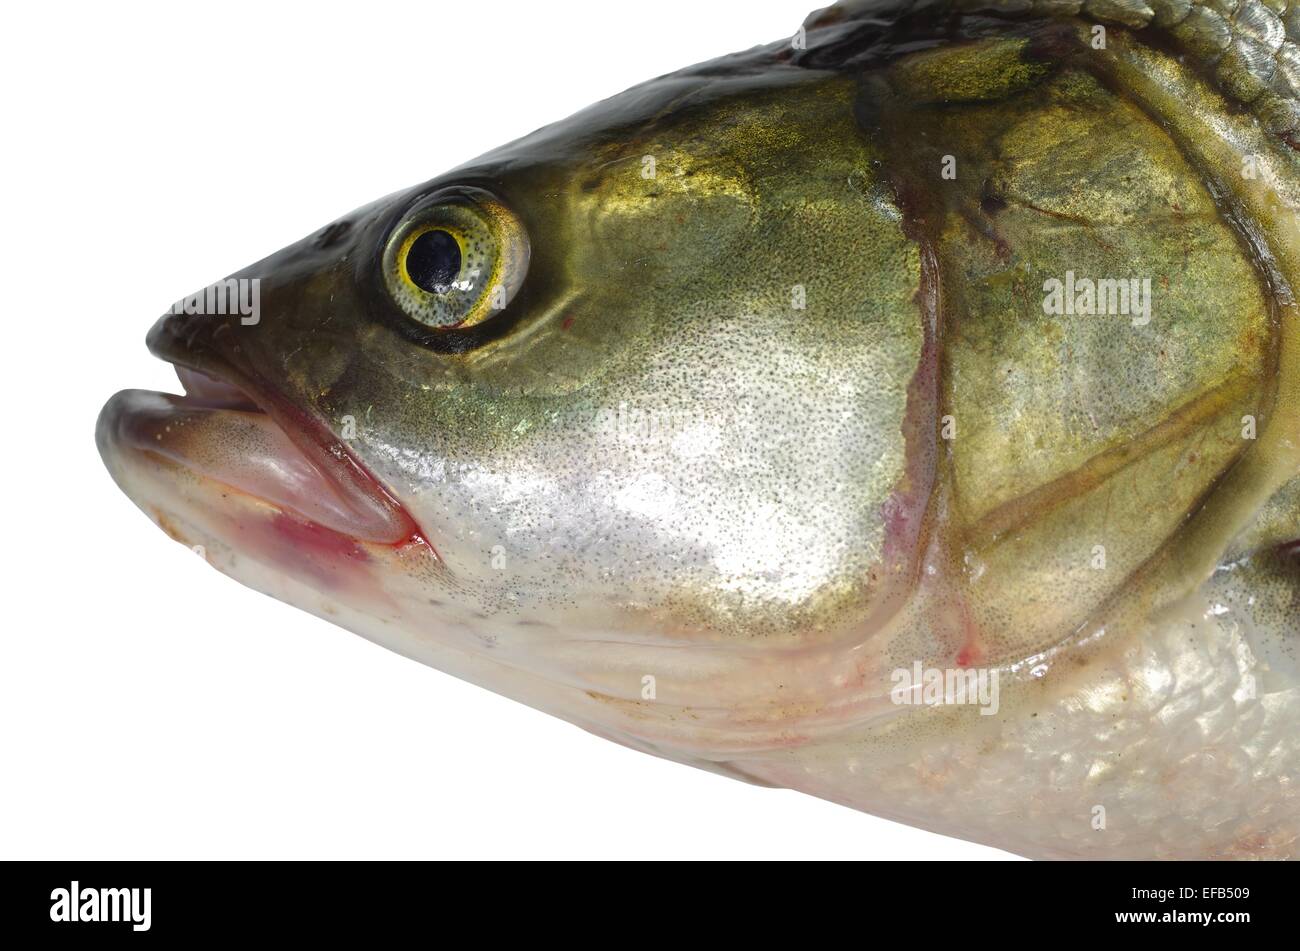 asp predatory freshwater fish on white background Stock Photo